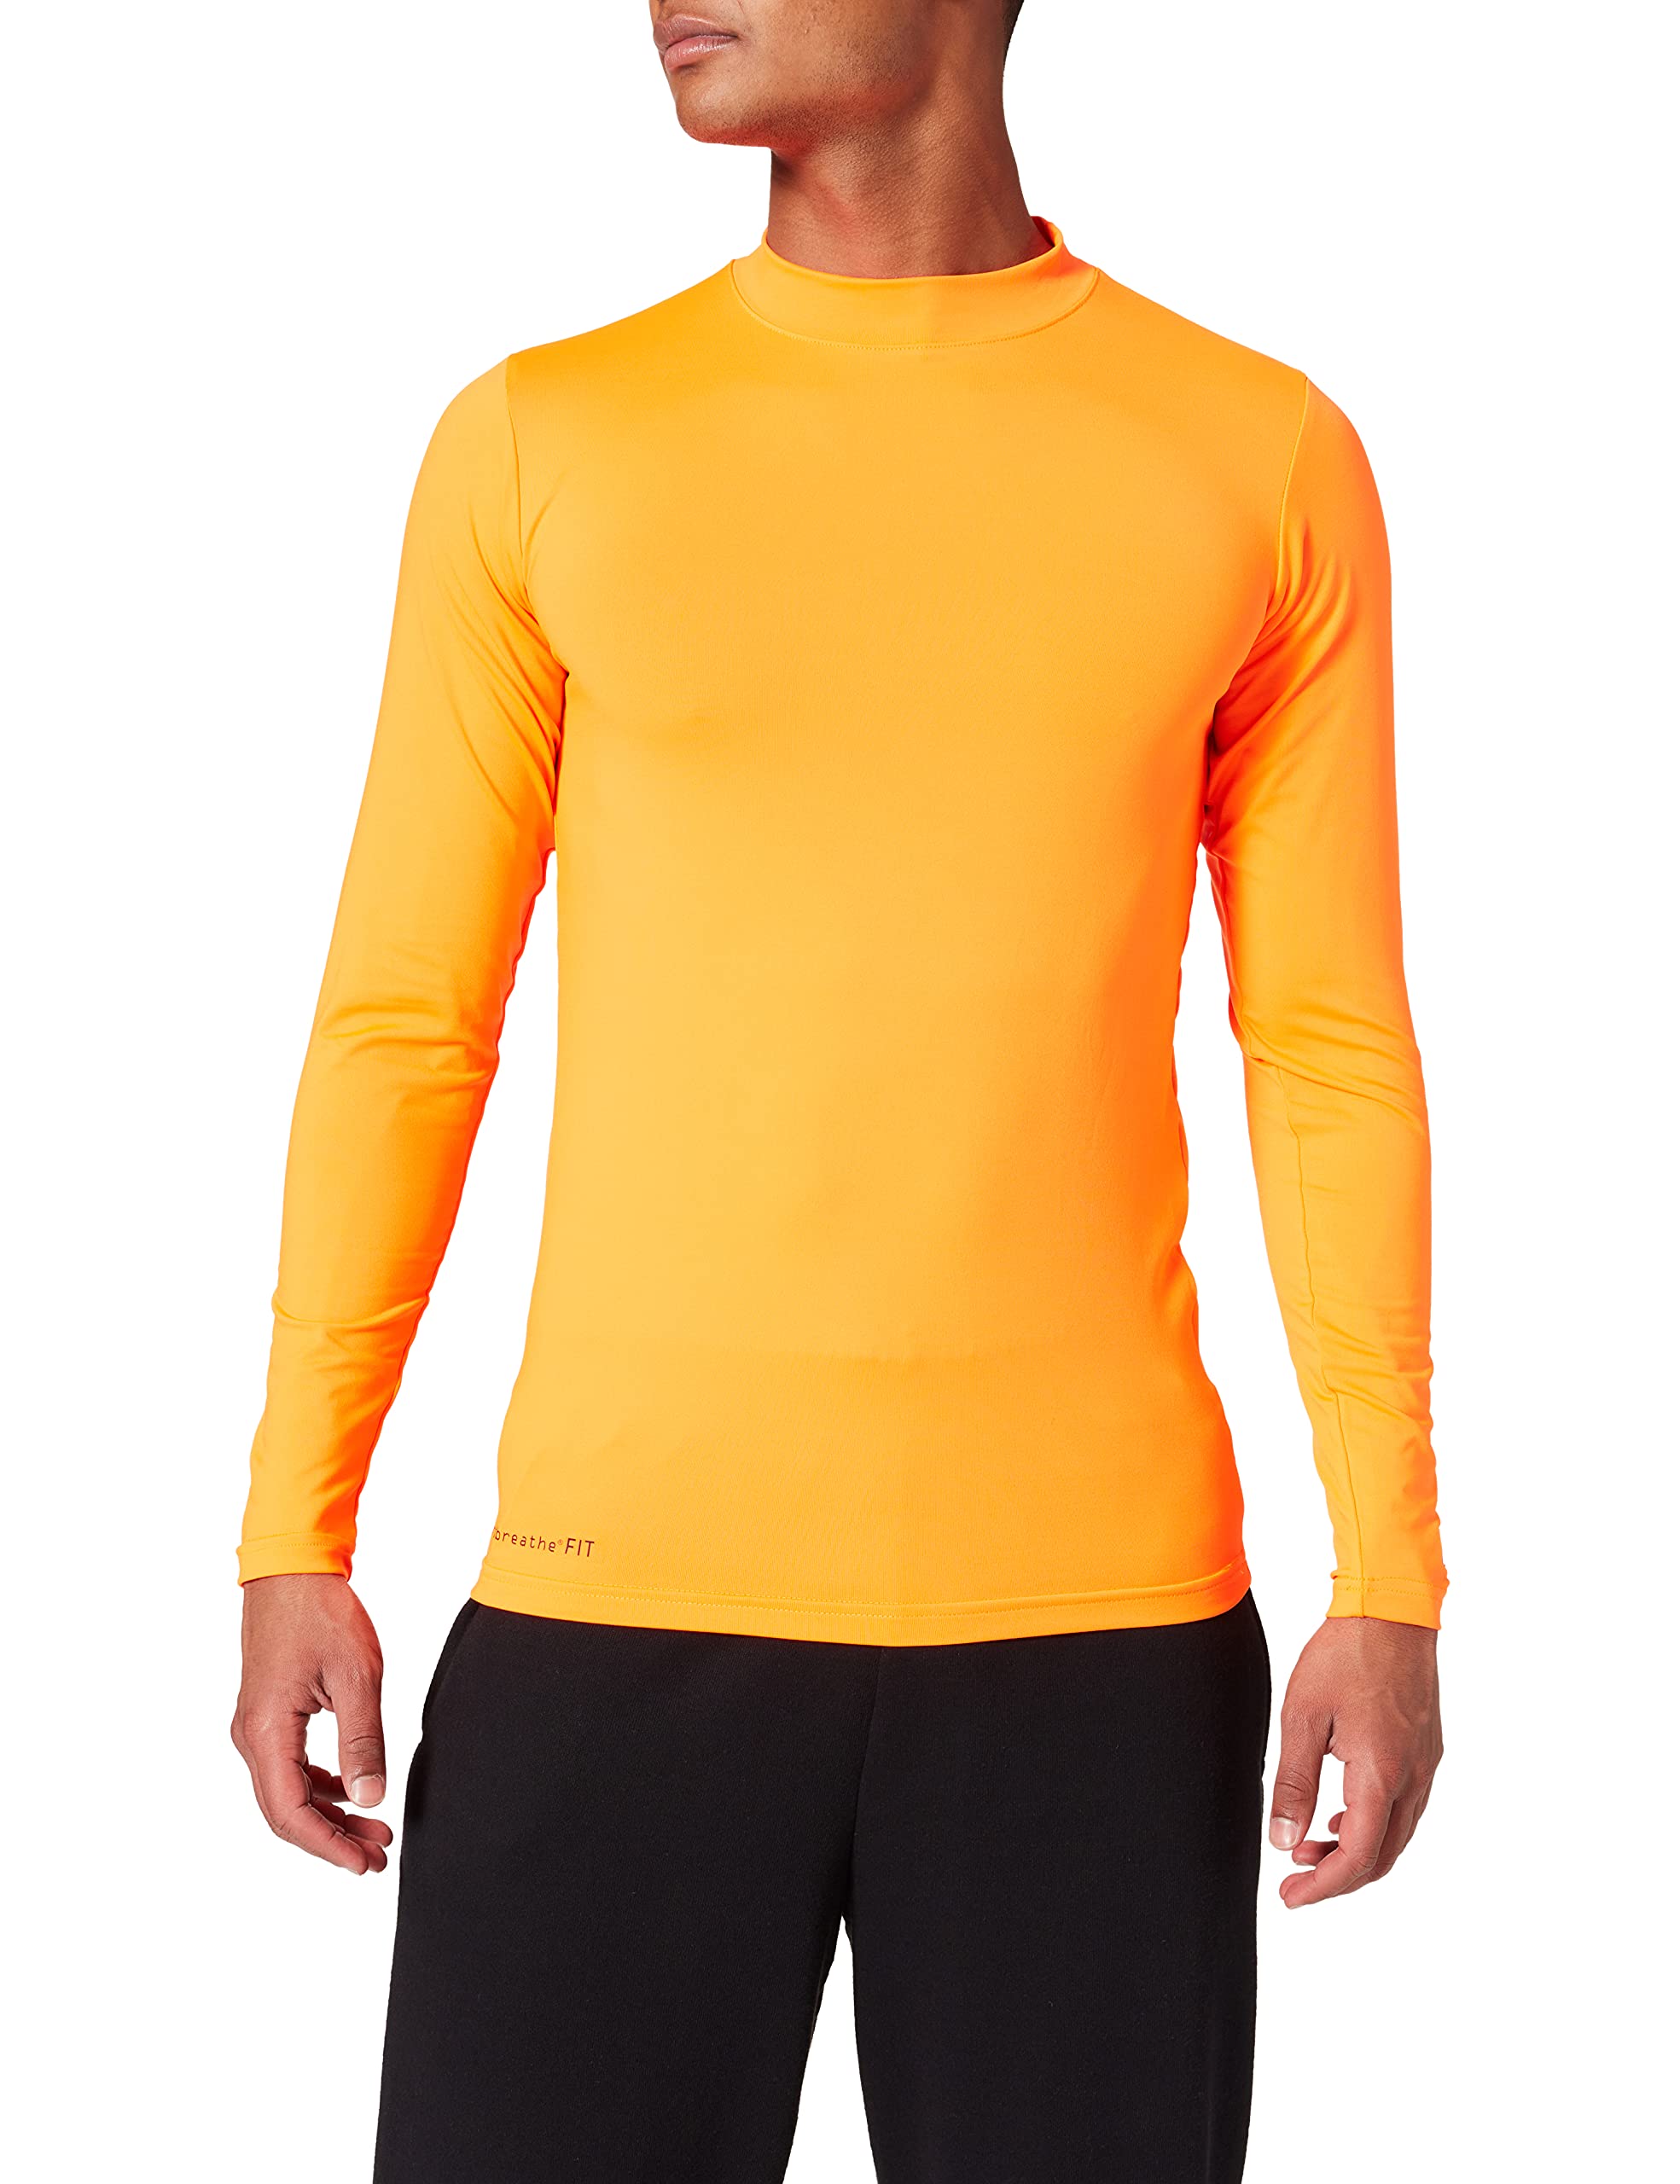 uhlsport Funktionsshirt LA Herren Shirt, Fluo orange, XL